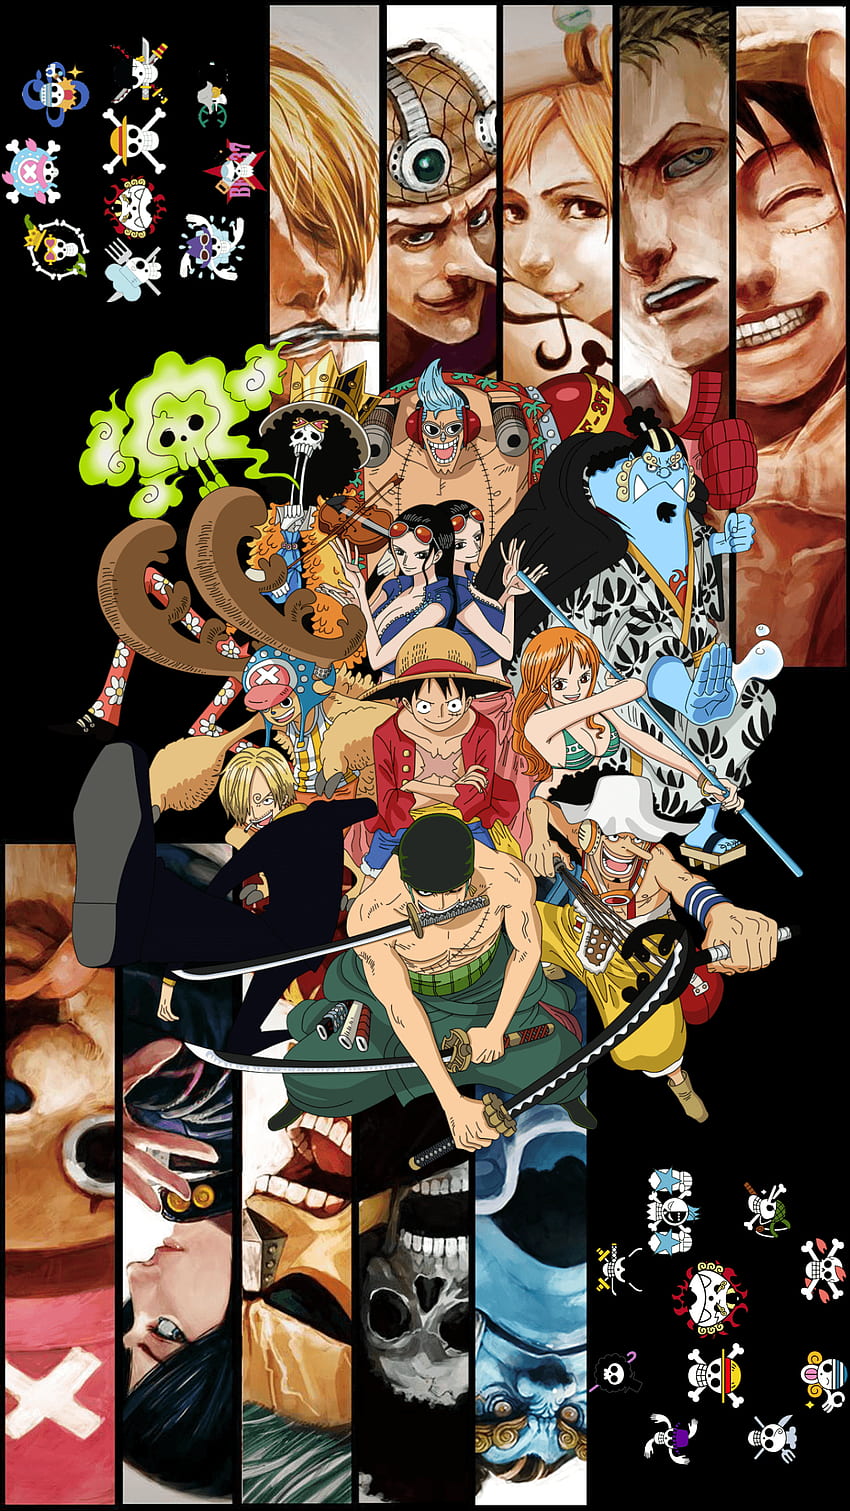 Semua Potret Kru Bajak Laut Topi Jerami, Potret One Piece wallpaper ponsel HD